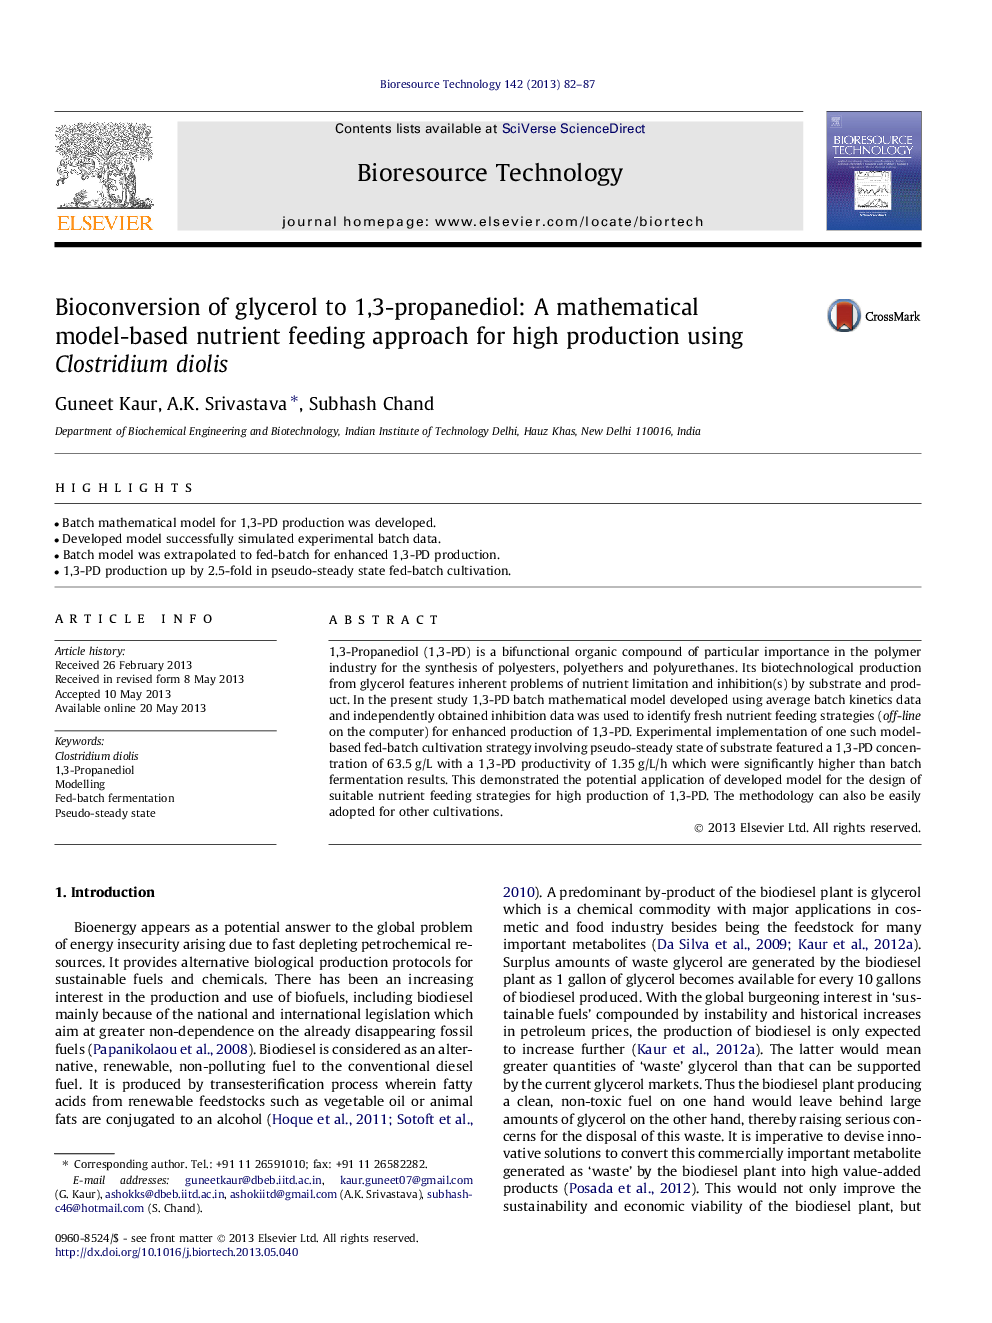 Bioconversion of glycerol to 1,3-propanediol: A mathematical model-based nutrient feeding approach for high production using Clostridium diolis